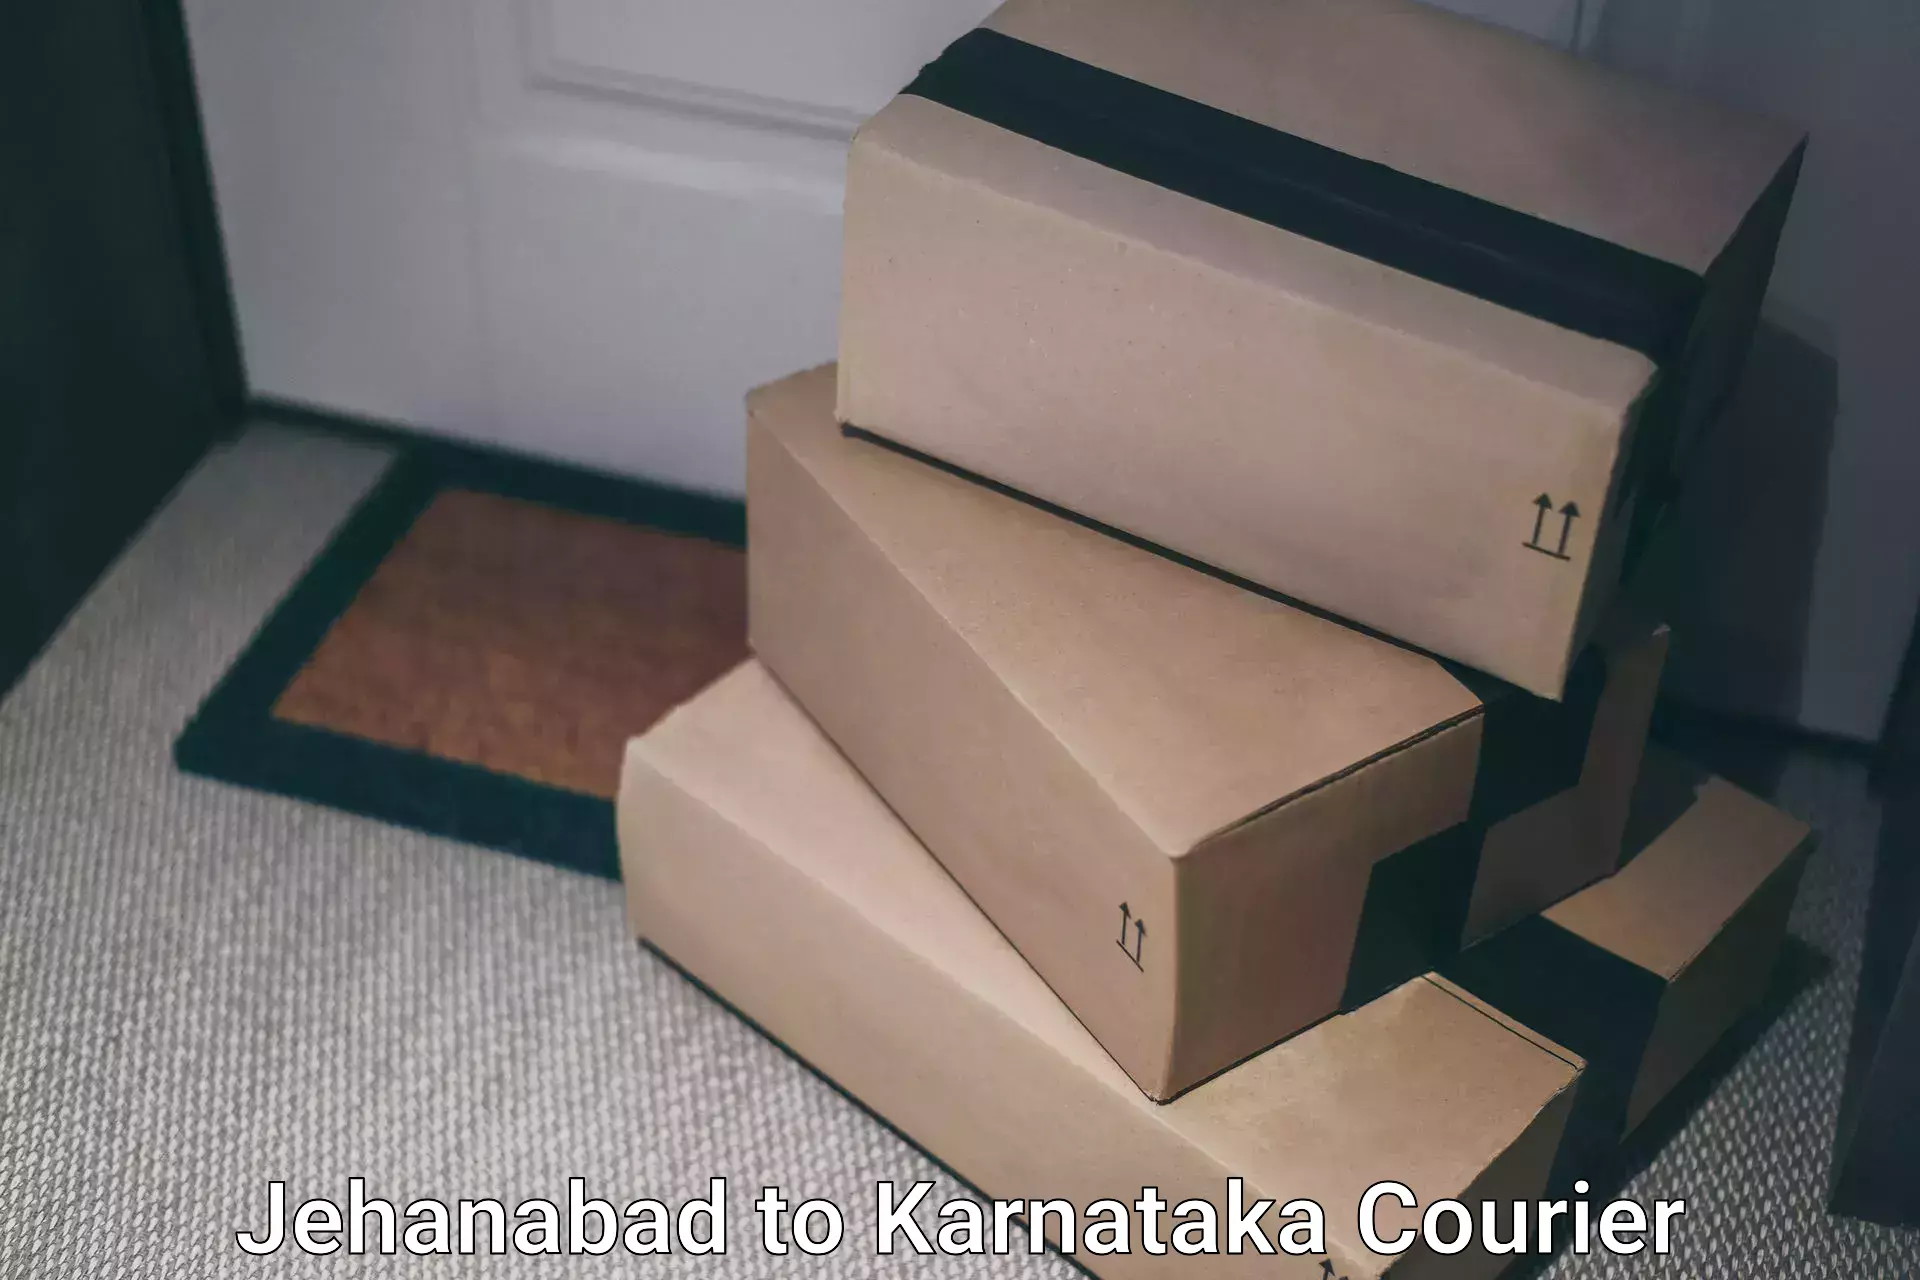 Flexible delivery schedules Jehanabad to Basavana Bagewadi